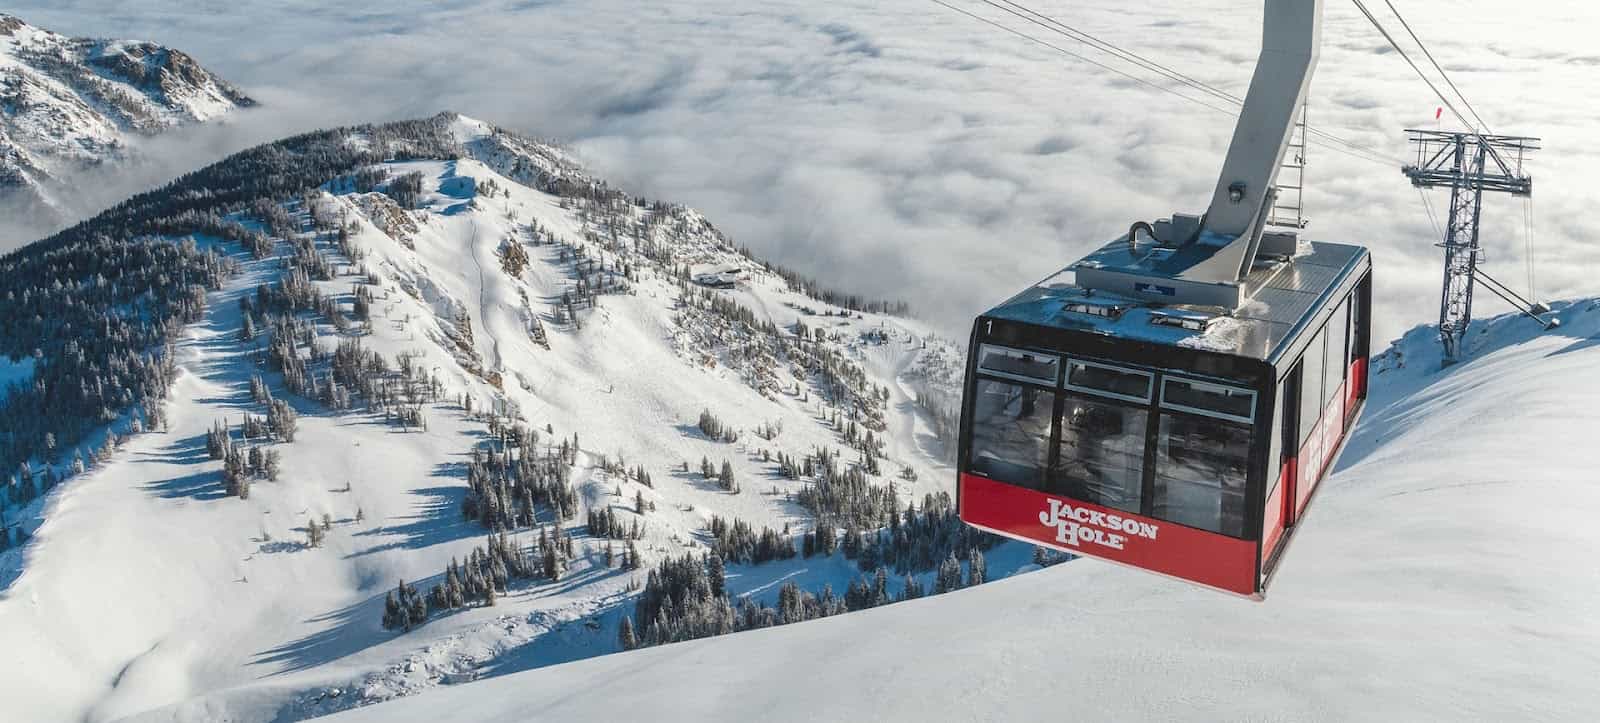 Jackson Hole aerial tram